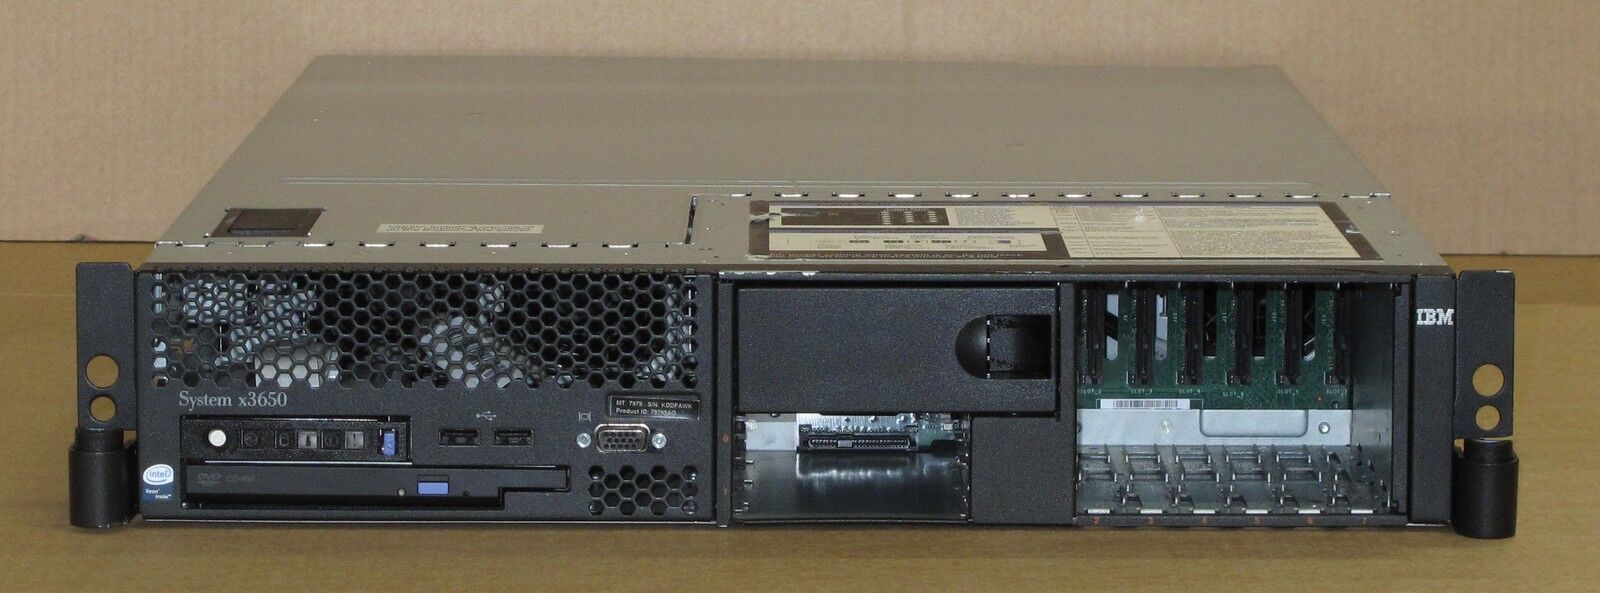 IBM X3650 2U Server 2 x DUAL-Core XEON X5063 3.2Ghz, 2Gb RAM, DVD Combo